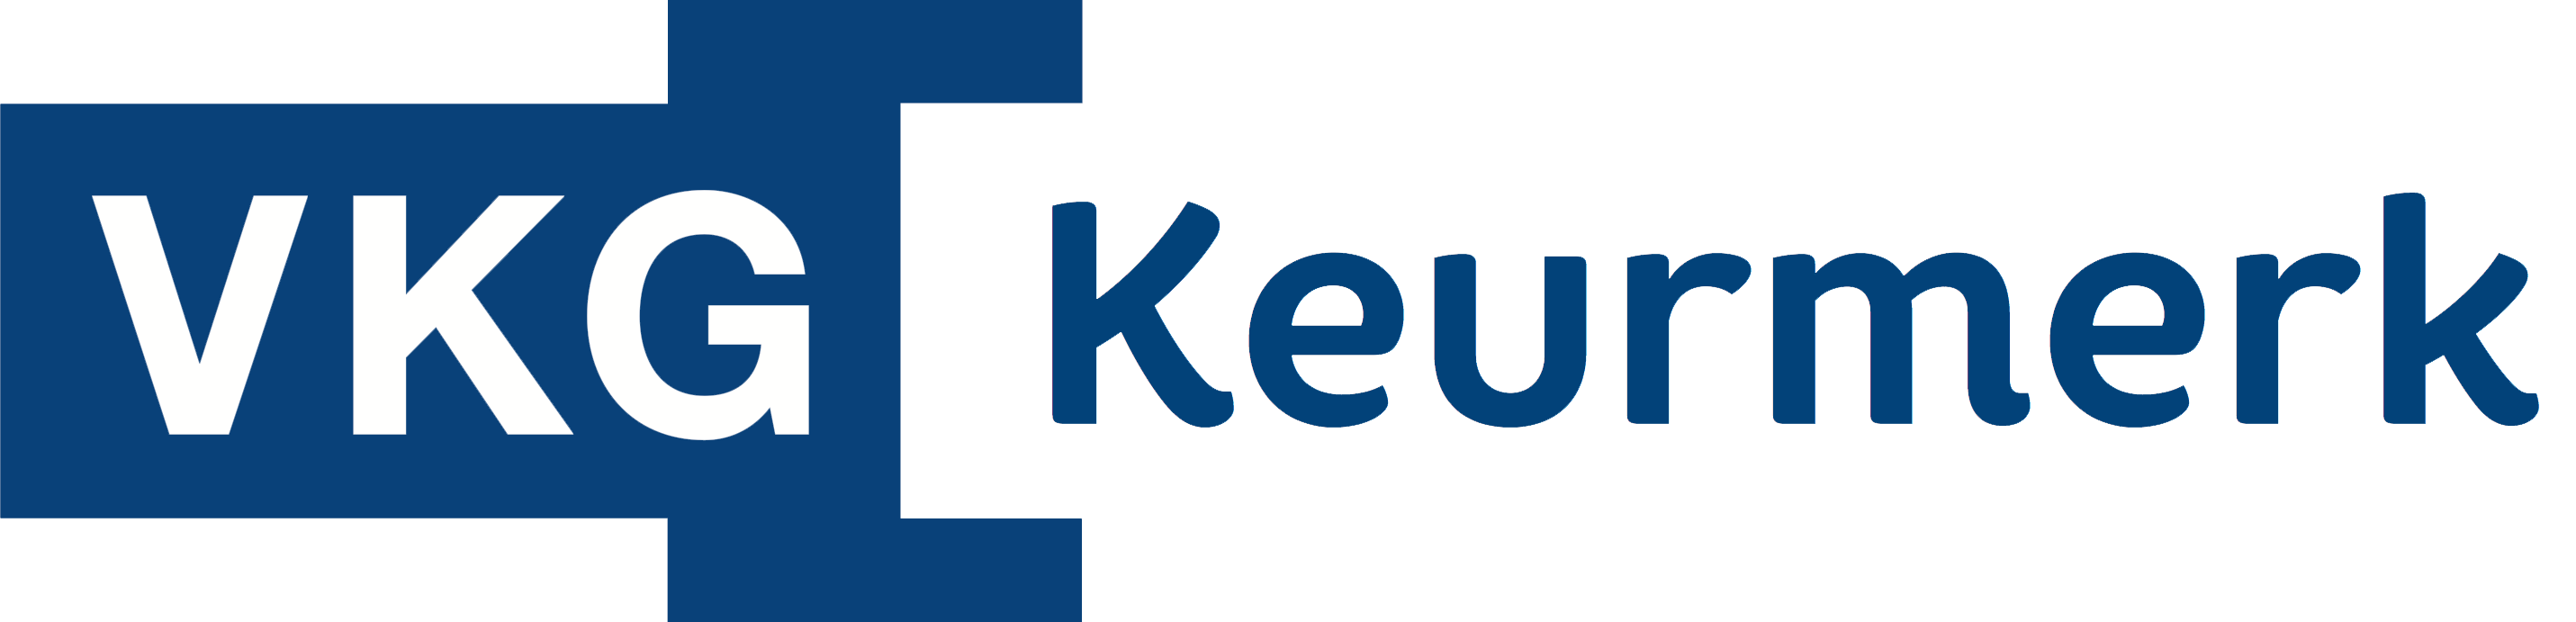 VKG Keurmerk logo zonder payoff